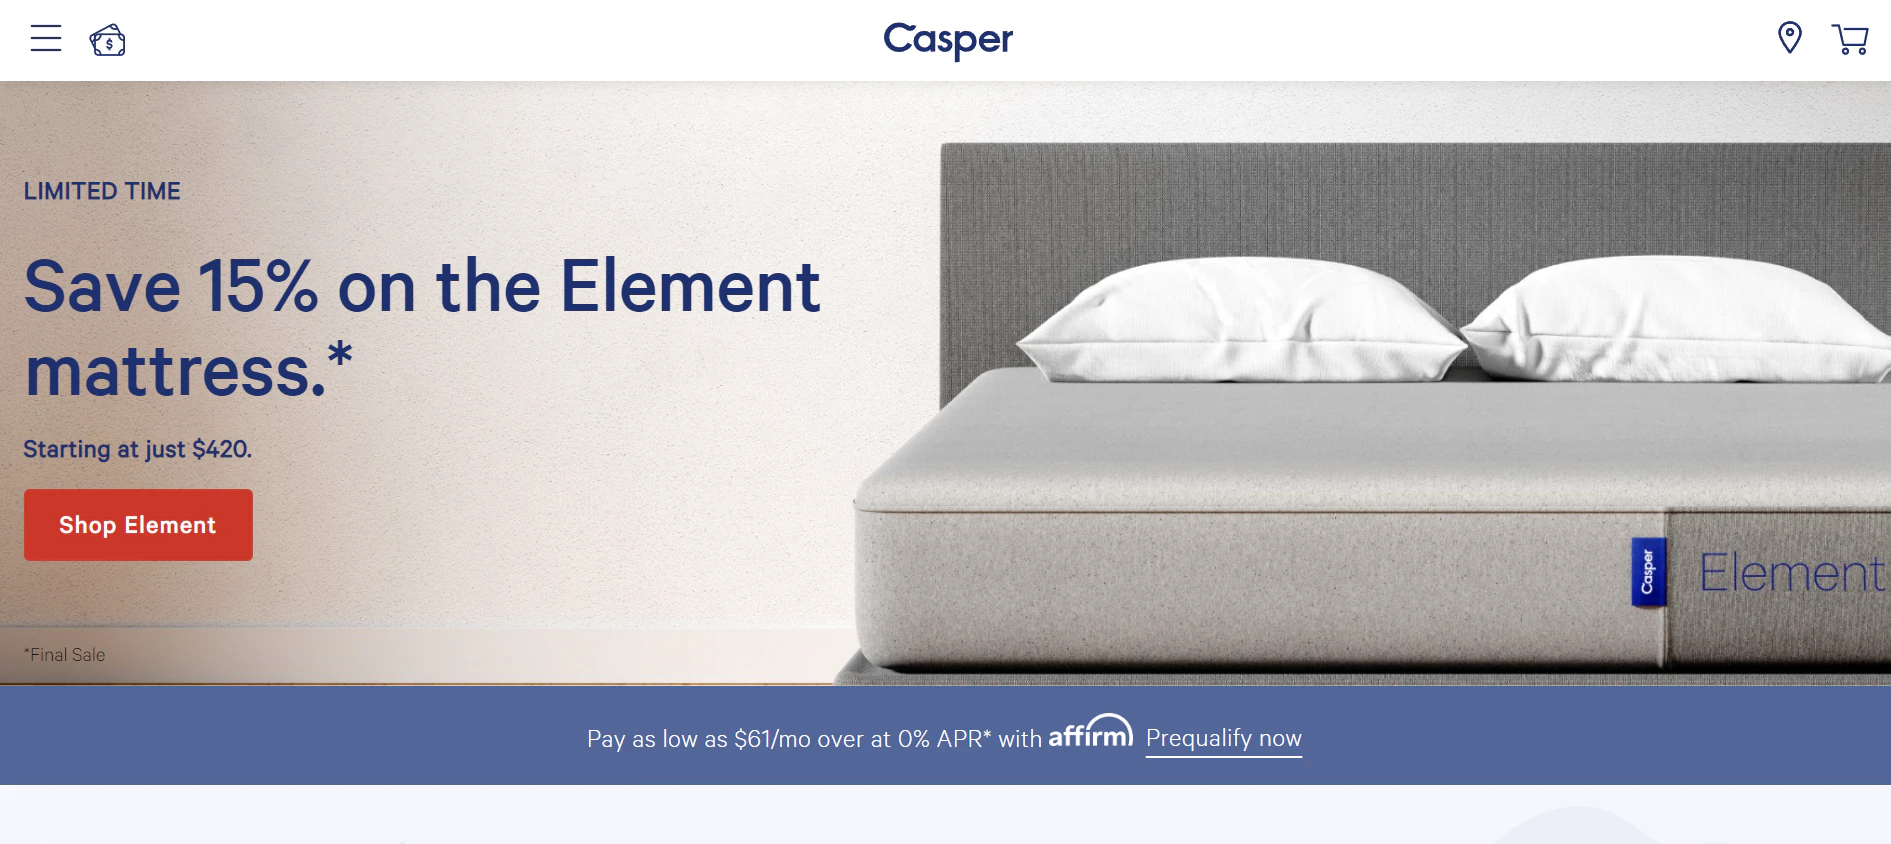 Casper is an ecommerce store that sells mattresses